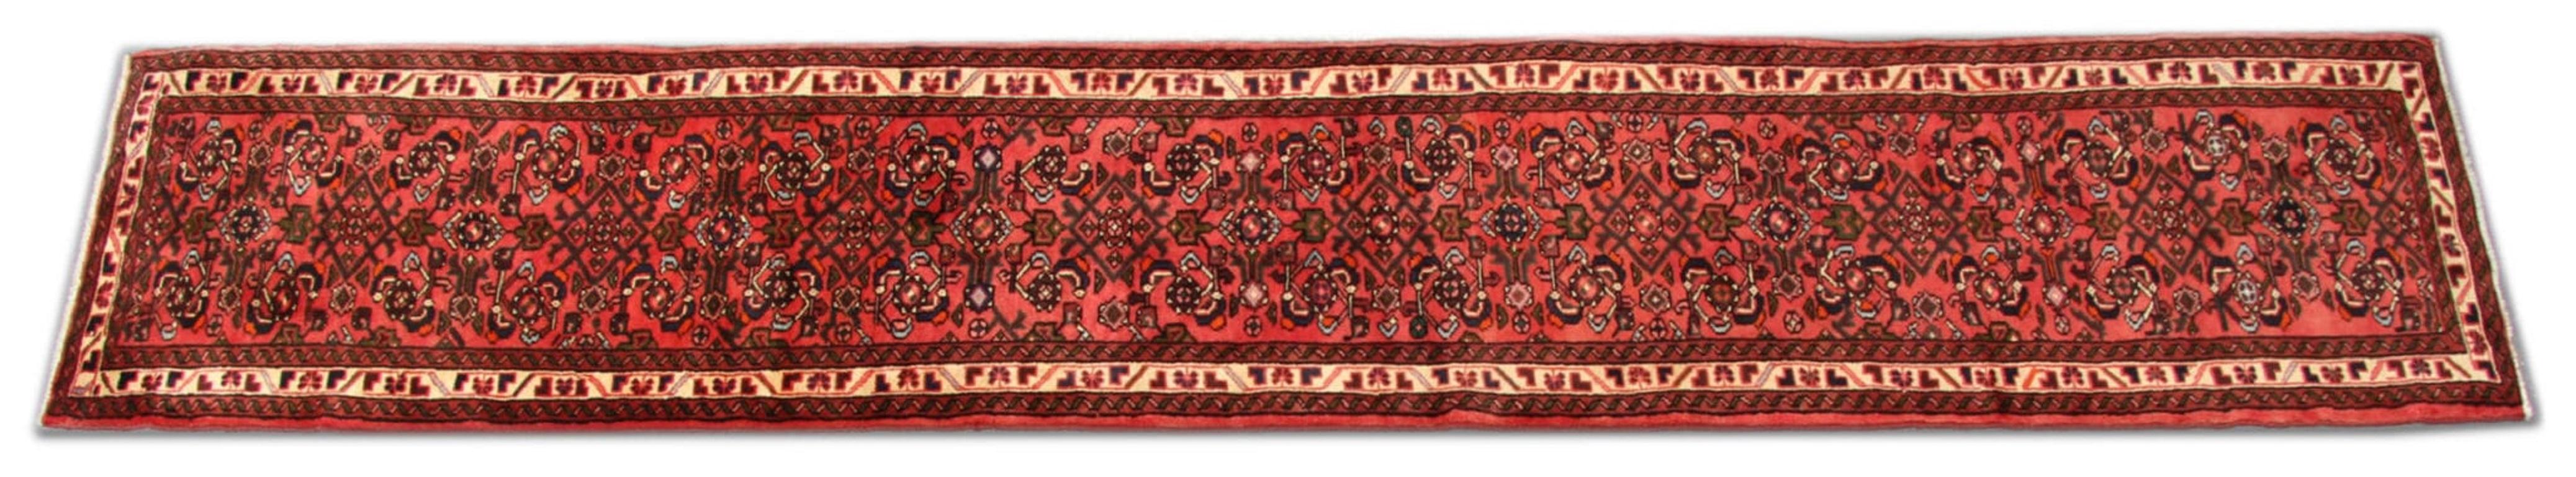 Art Deco Vintage Hussein Abad Carpet Runner, Geometric Traditional Runner Rug For Sale